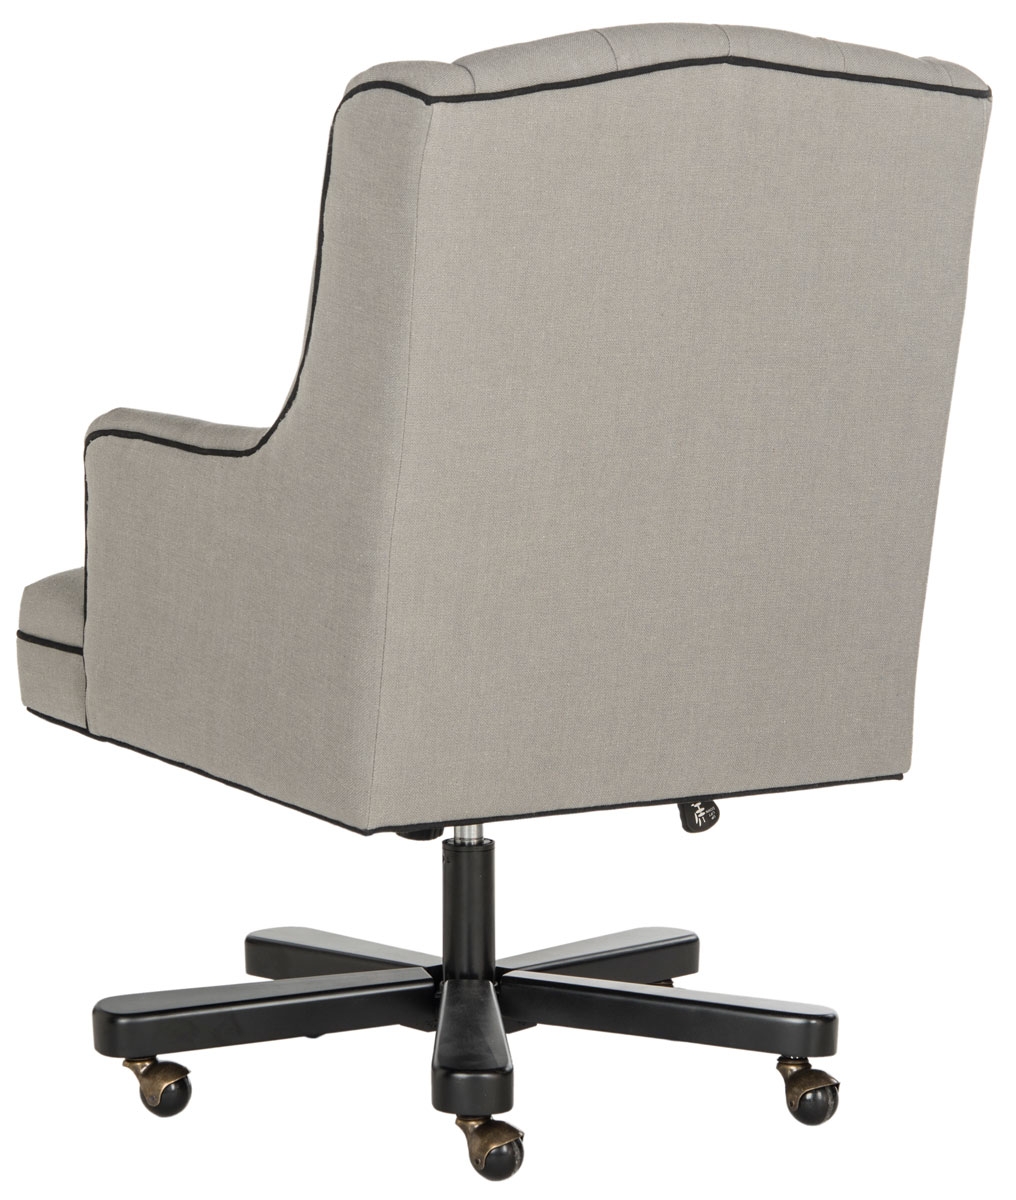 Nichols Office Chair - Granite/Black - Arlo Home - Image 2